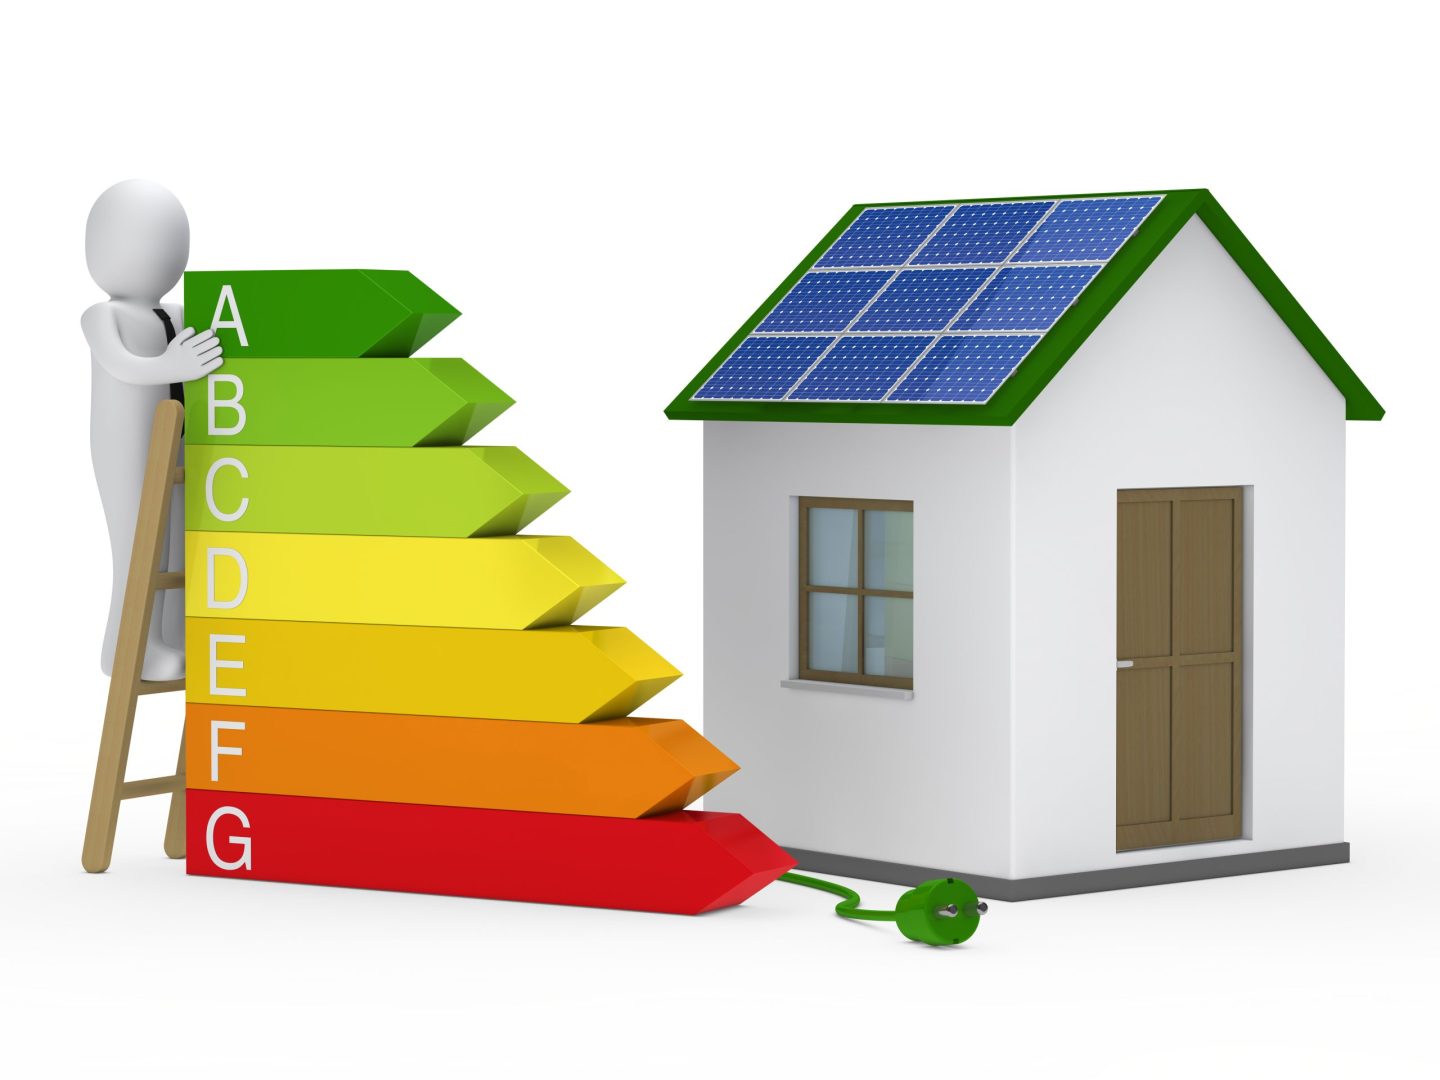 maison ameliorer certificat energetique renovation energetique gloable wizzimmo